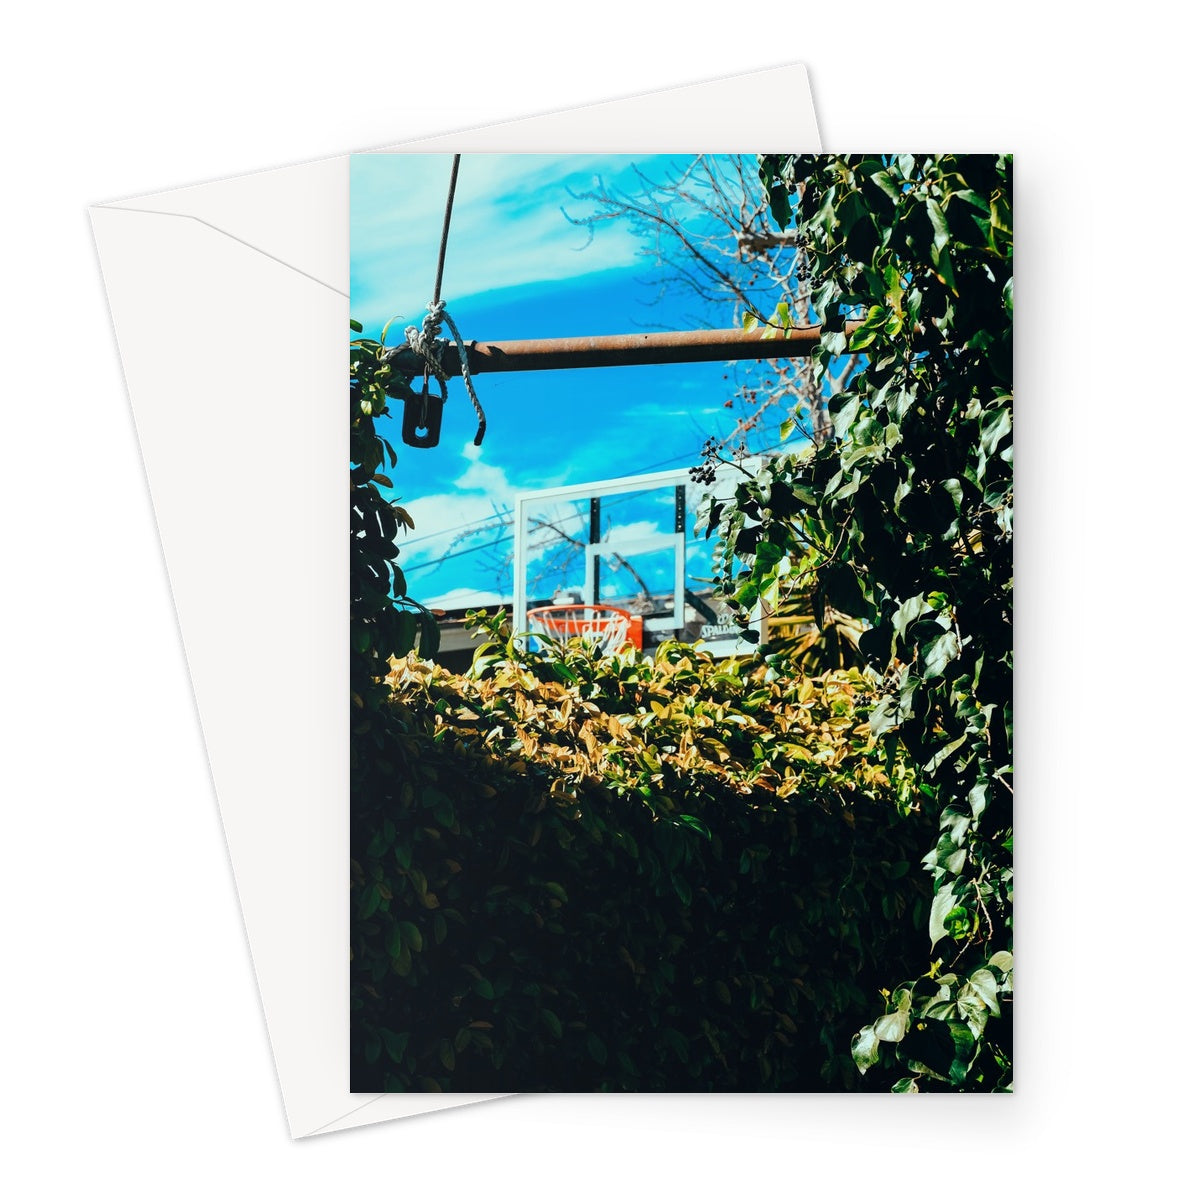 Taking Shots Vol.2 #6 - Playa del Rey, CA - Greeting Card